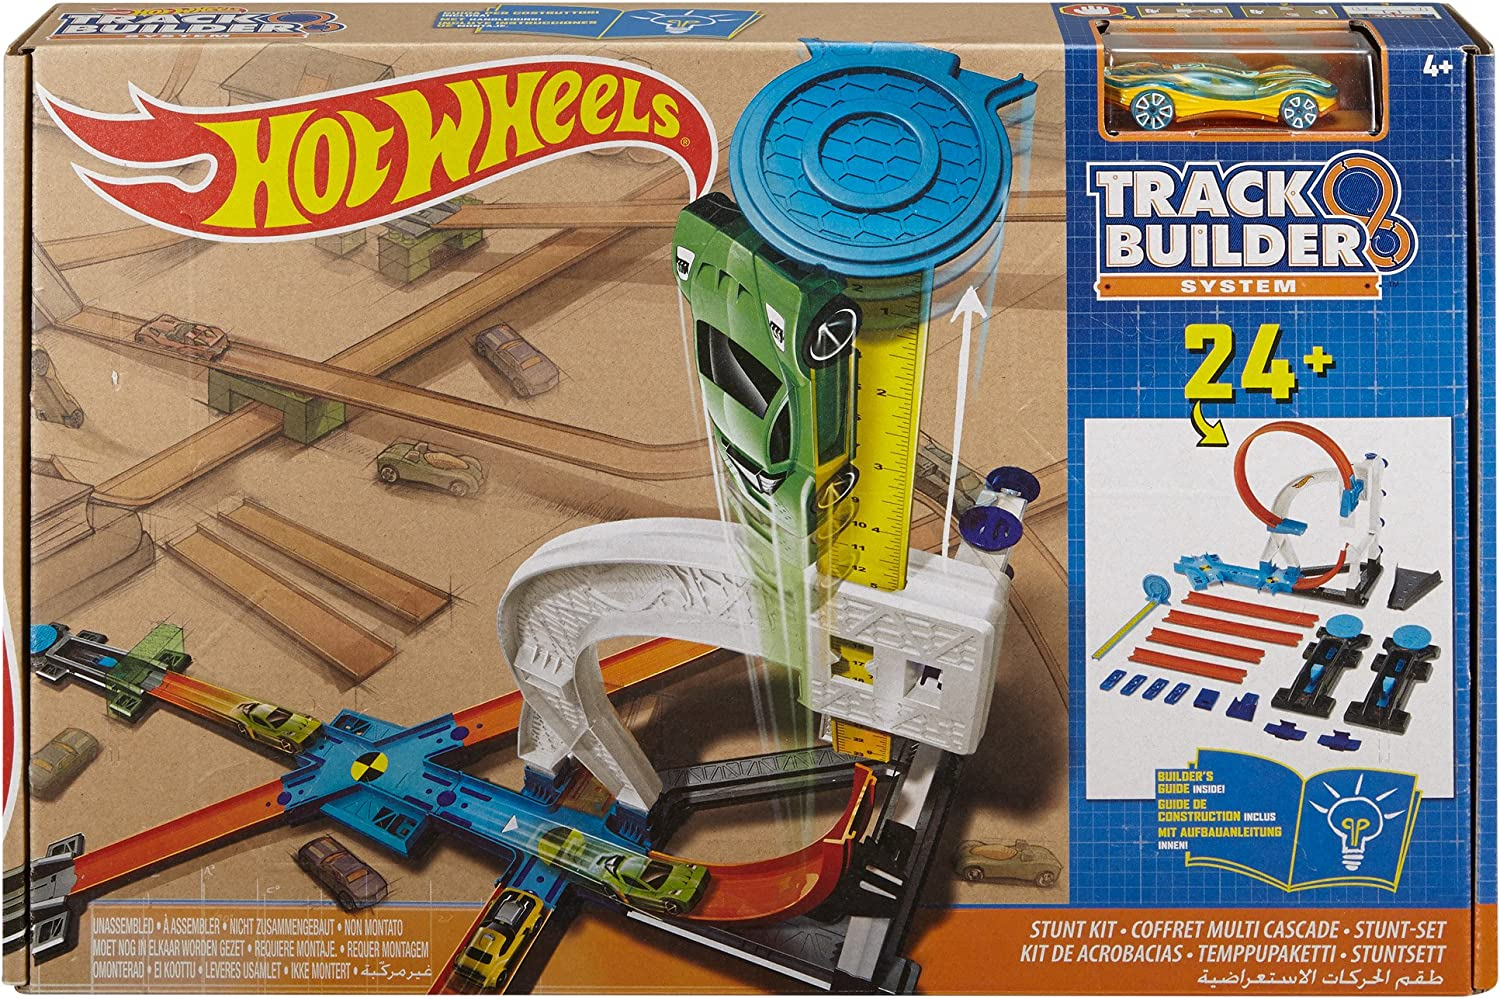 Хот Вилс track Builder System. Hot Wheels dlf28. Мертвая петля хот Вилс детский. Хот ВТЛЗ треки с мёртвой петлёй. Tracks builder